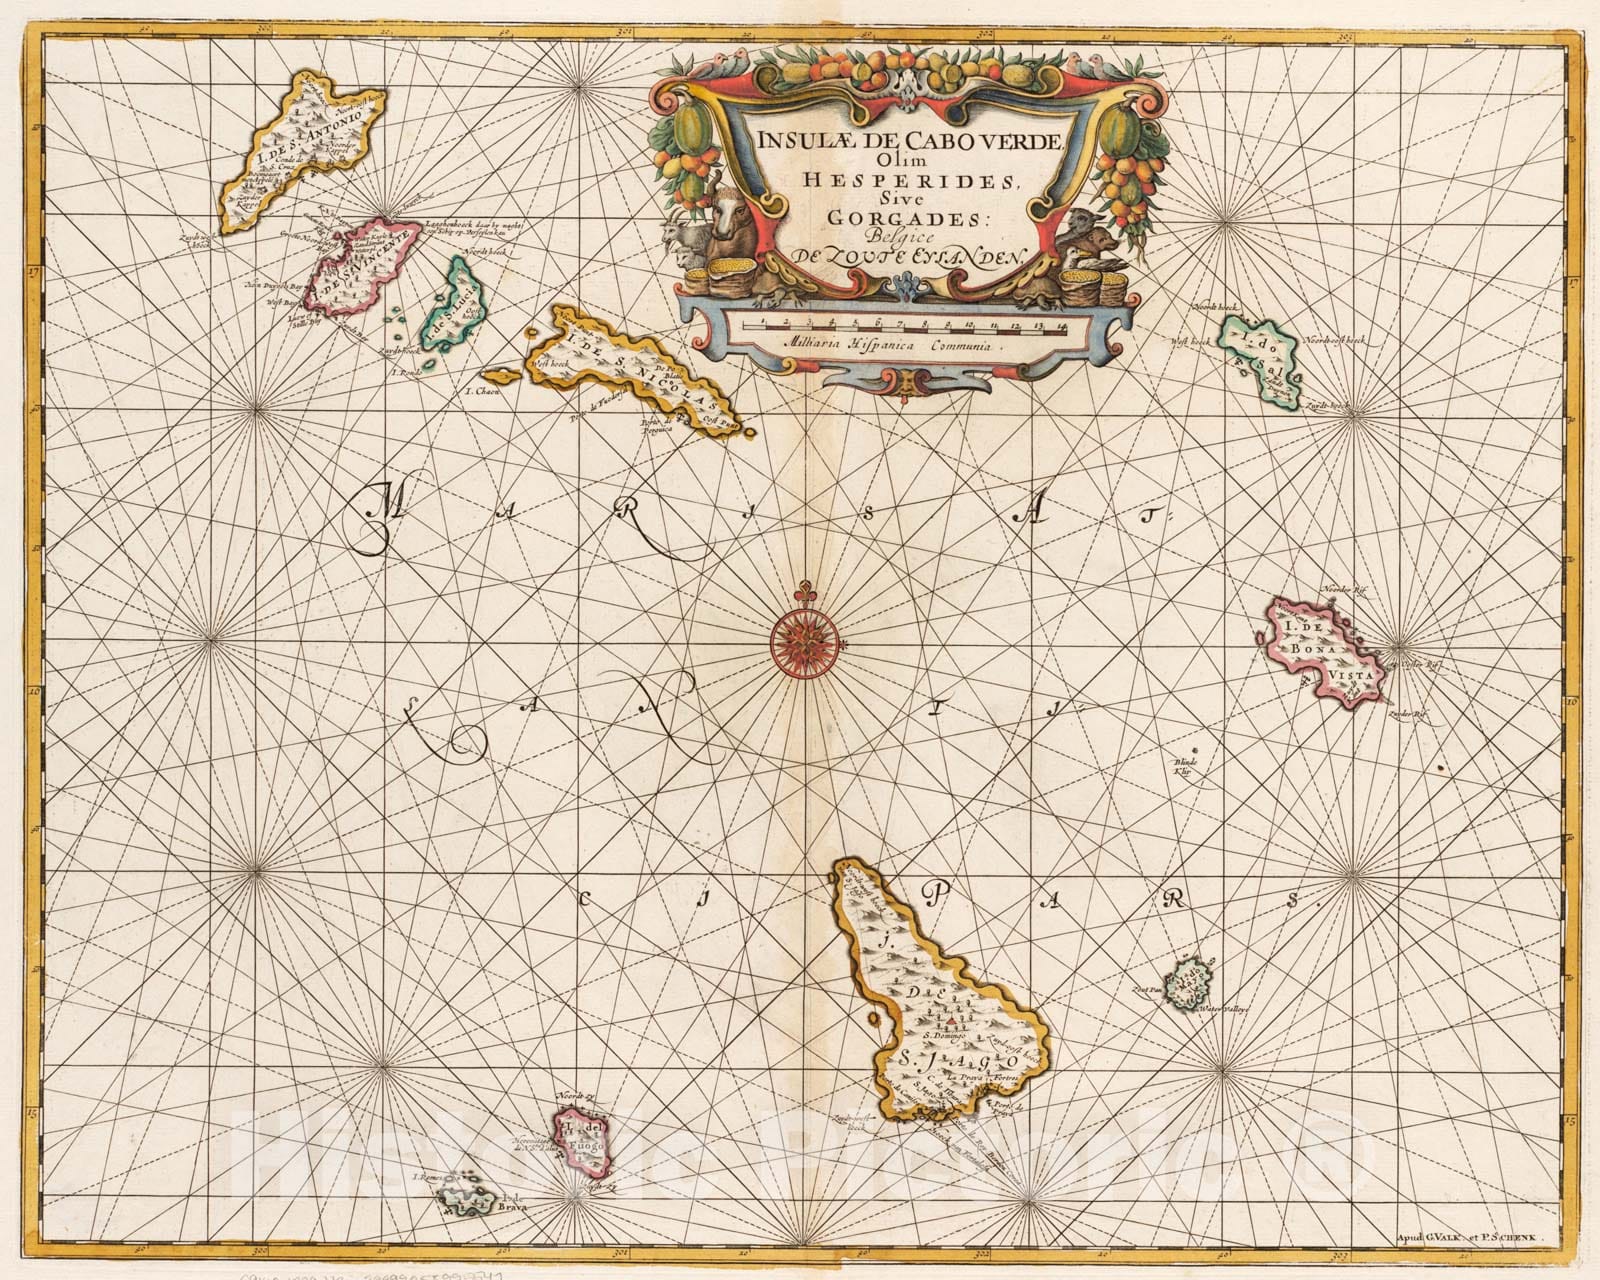 Historical Map, 1709-1718 Insulae de Cabo Verde, Olim Hesperides, sive Gorgades : Belgice de zoute eylanden, Vintage Wall Art